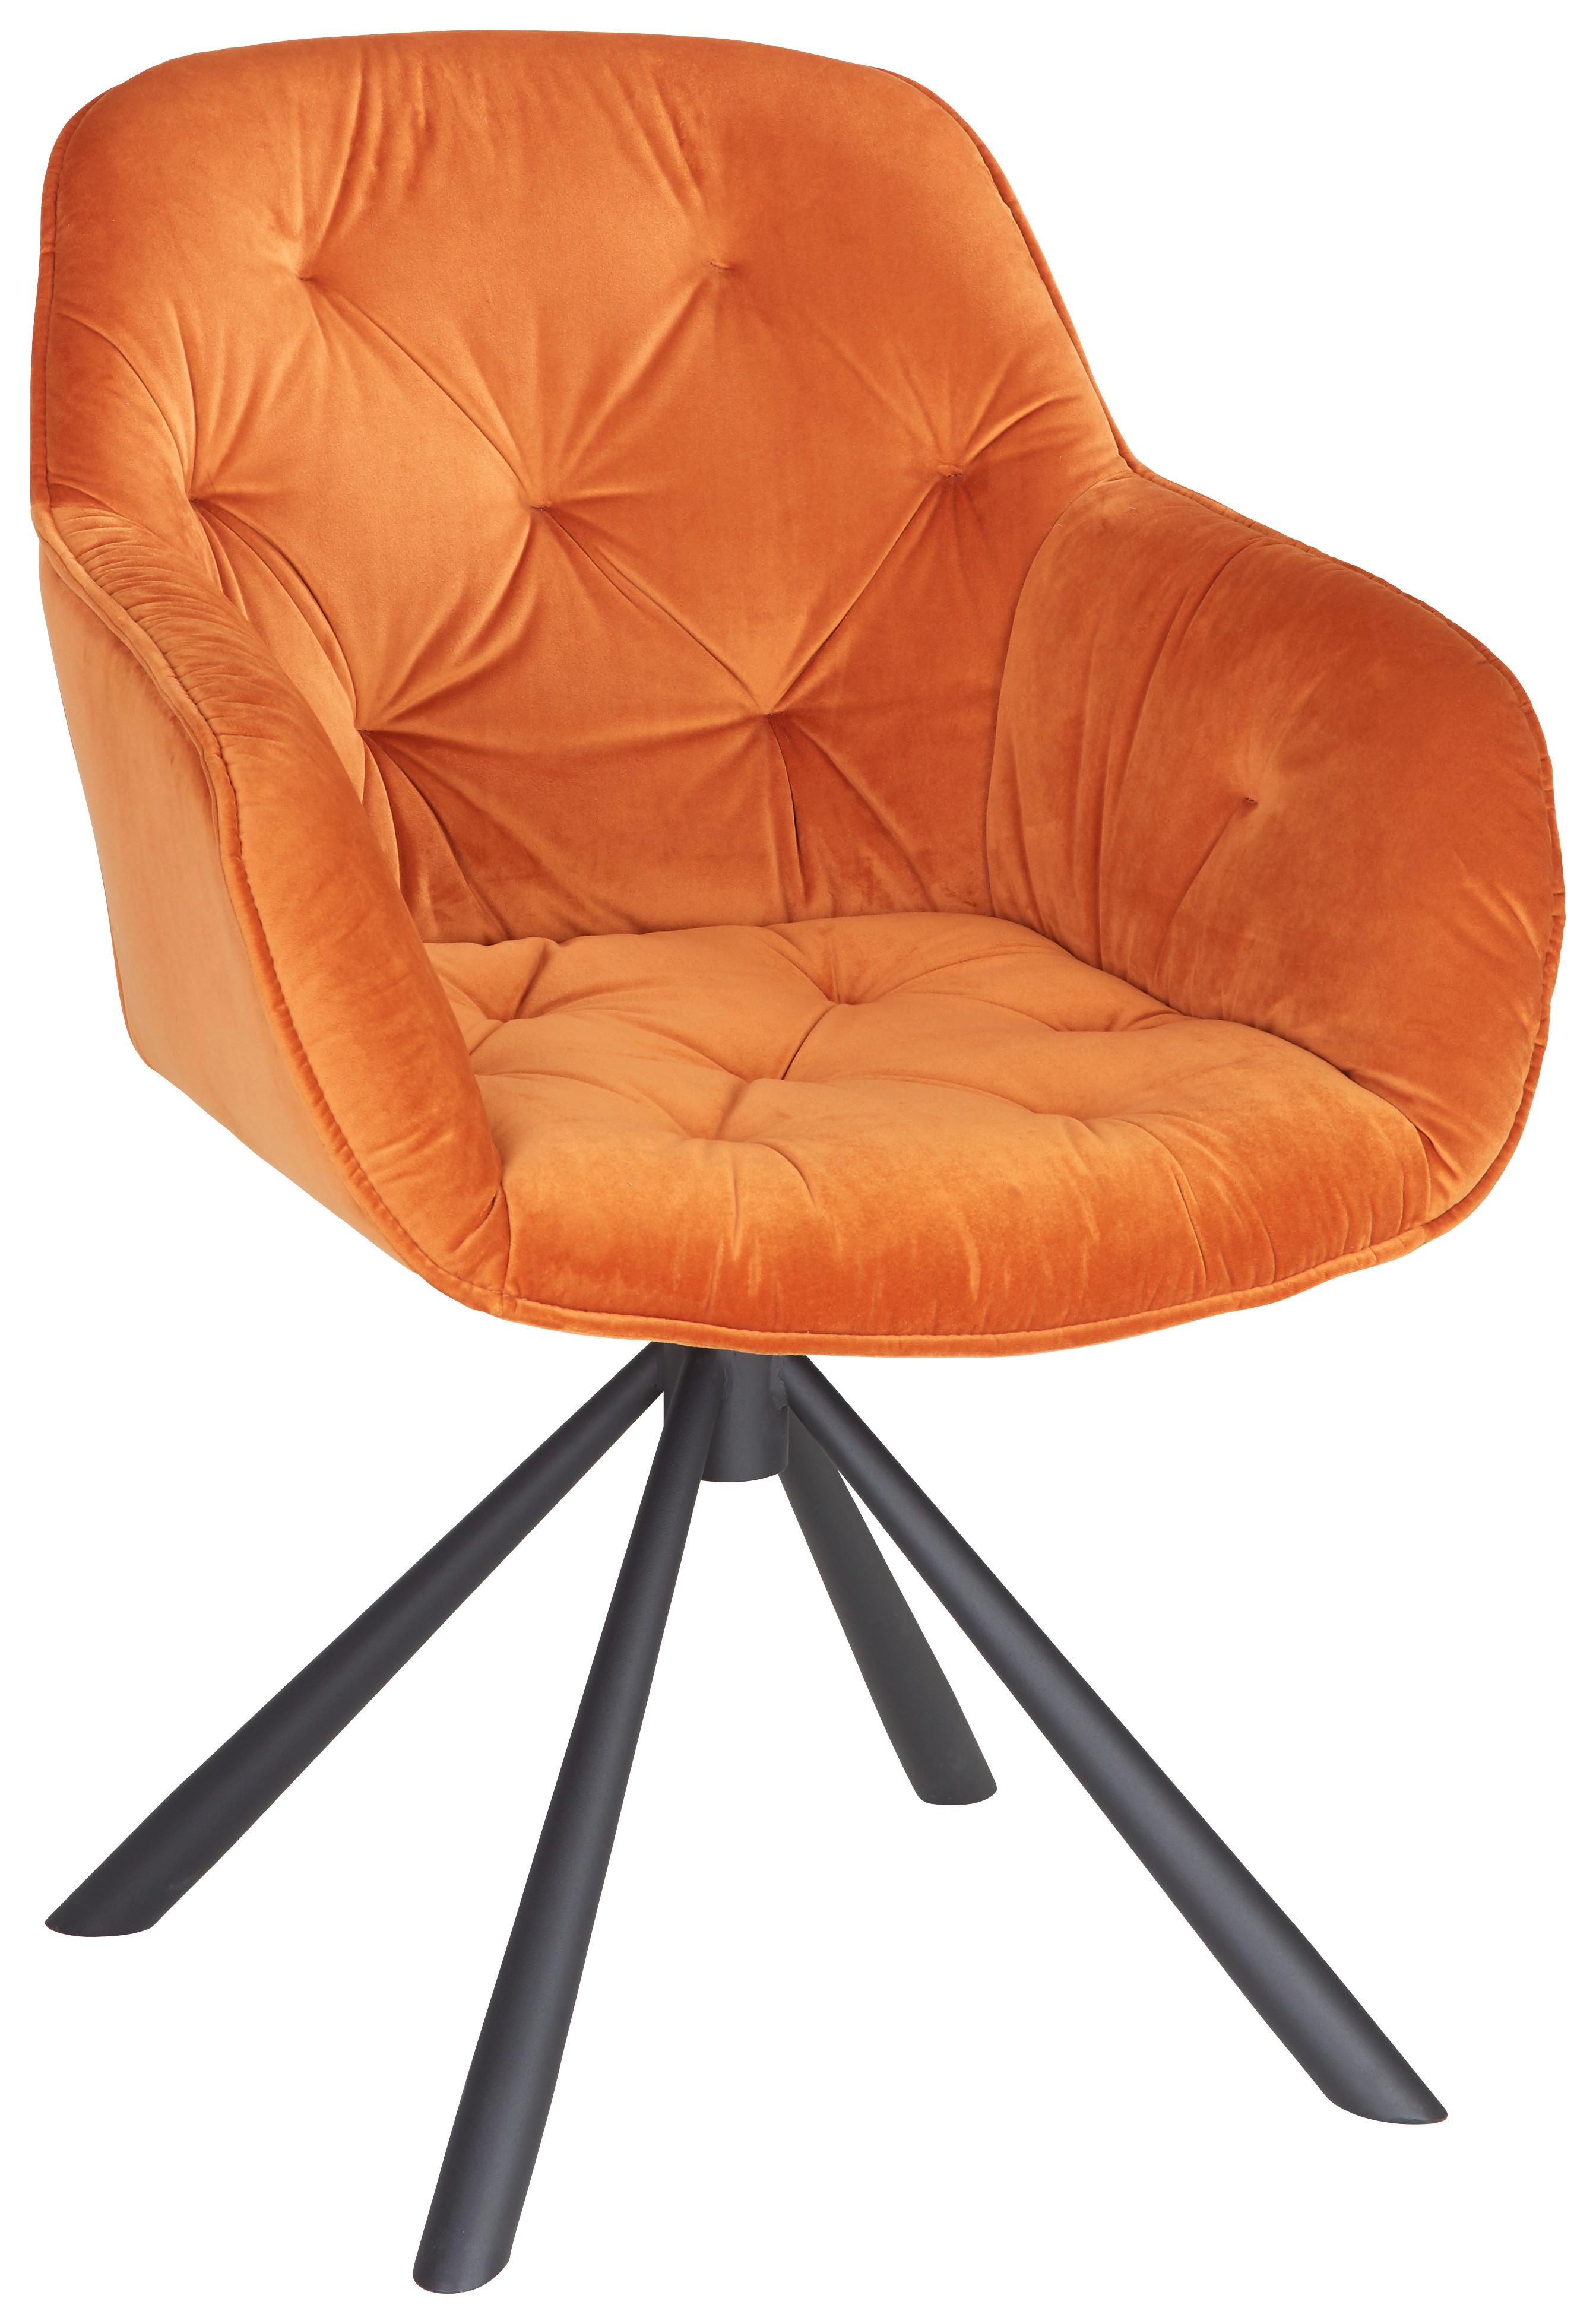 Židle Eileen Oranžová - oranžová/černá, Lifestyle, kov/dřevo (68/86/64cm) - Premium Living